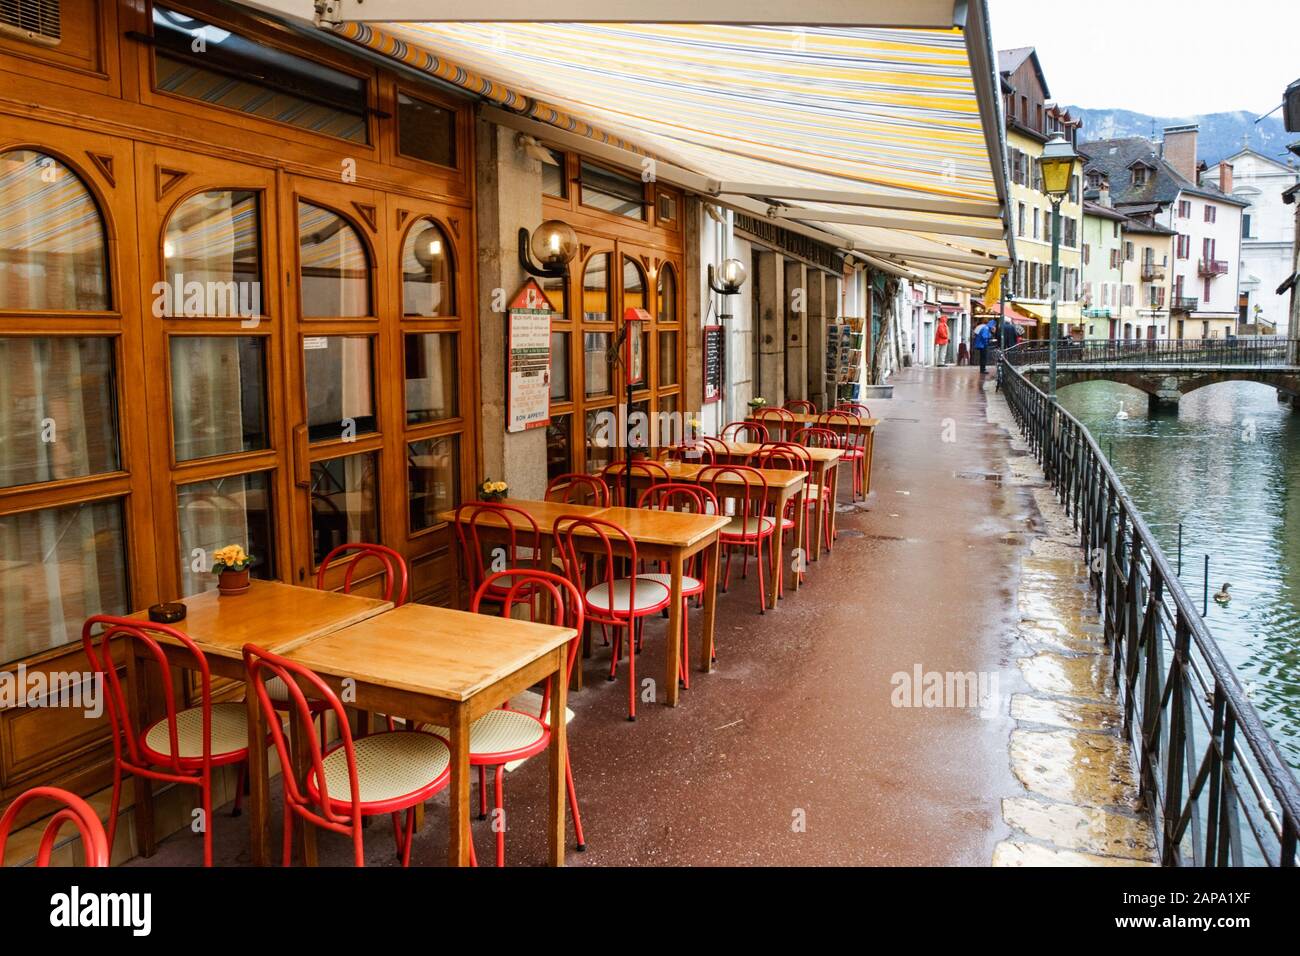 Empty street cafe on a rainy day Stock Photo